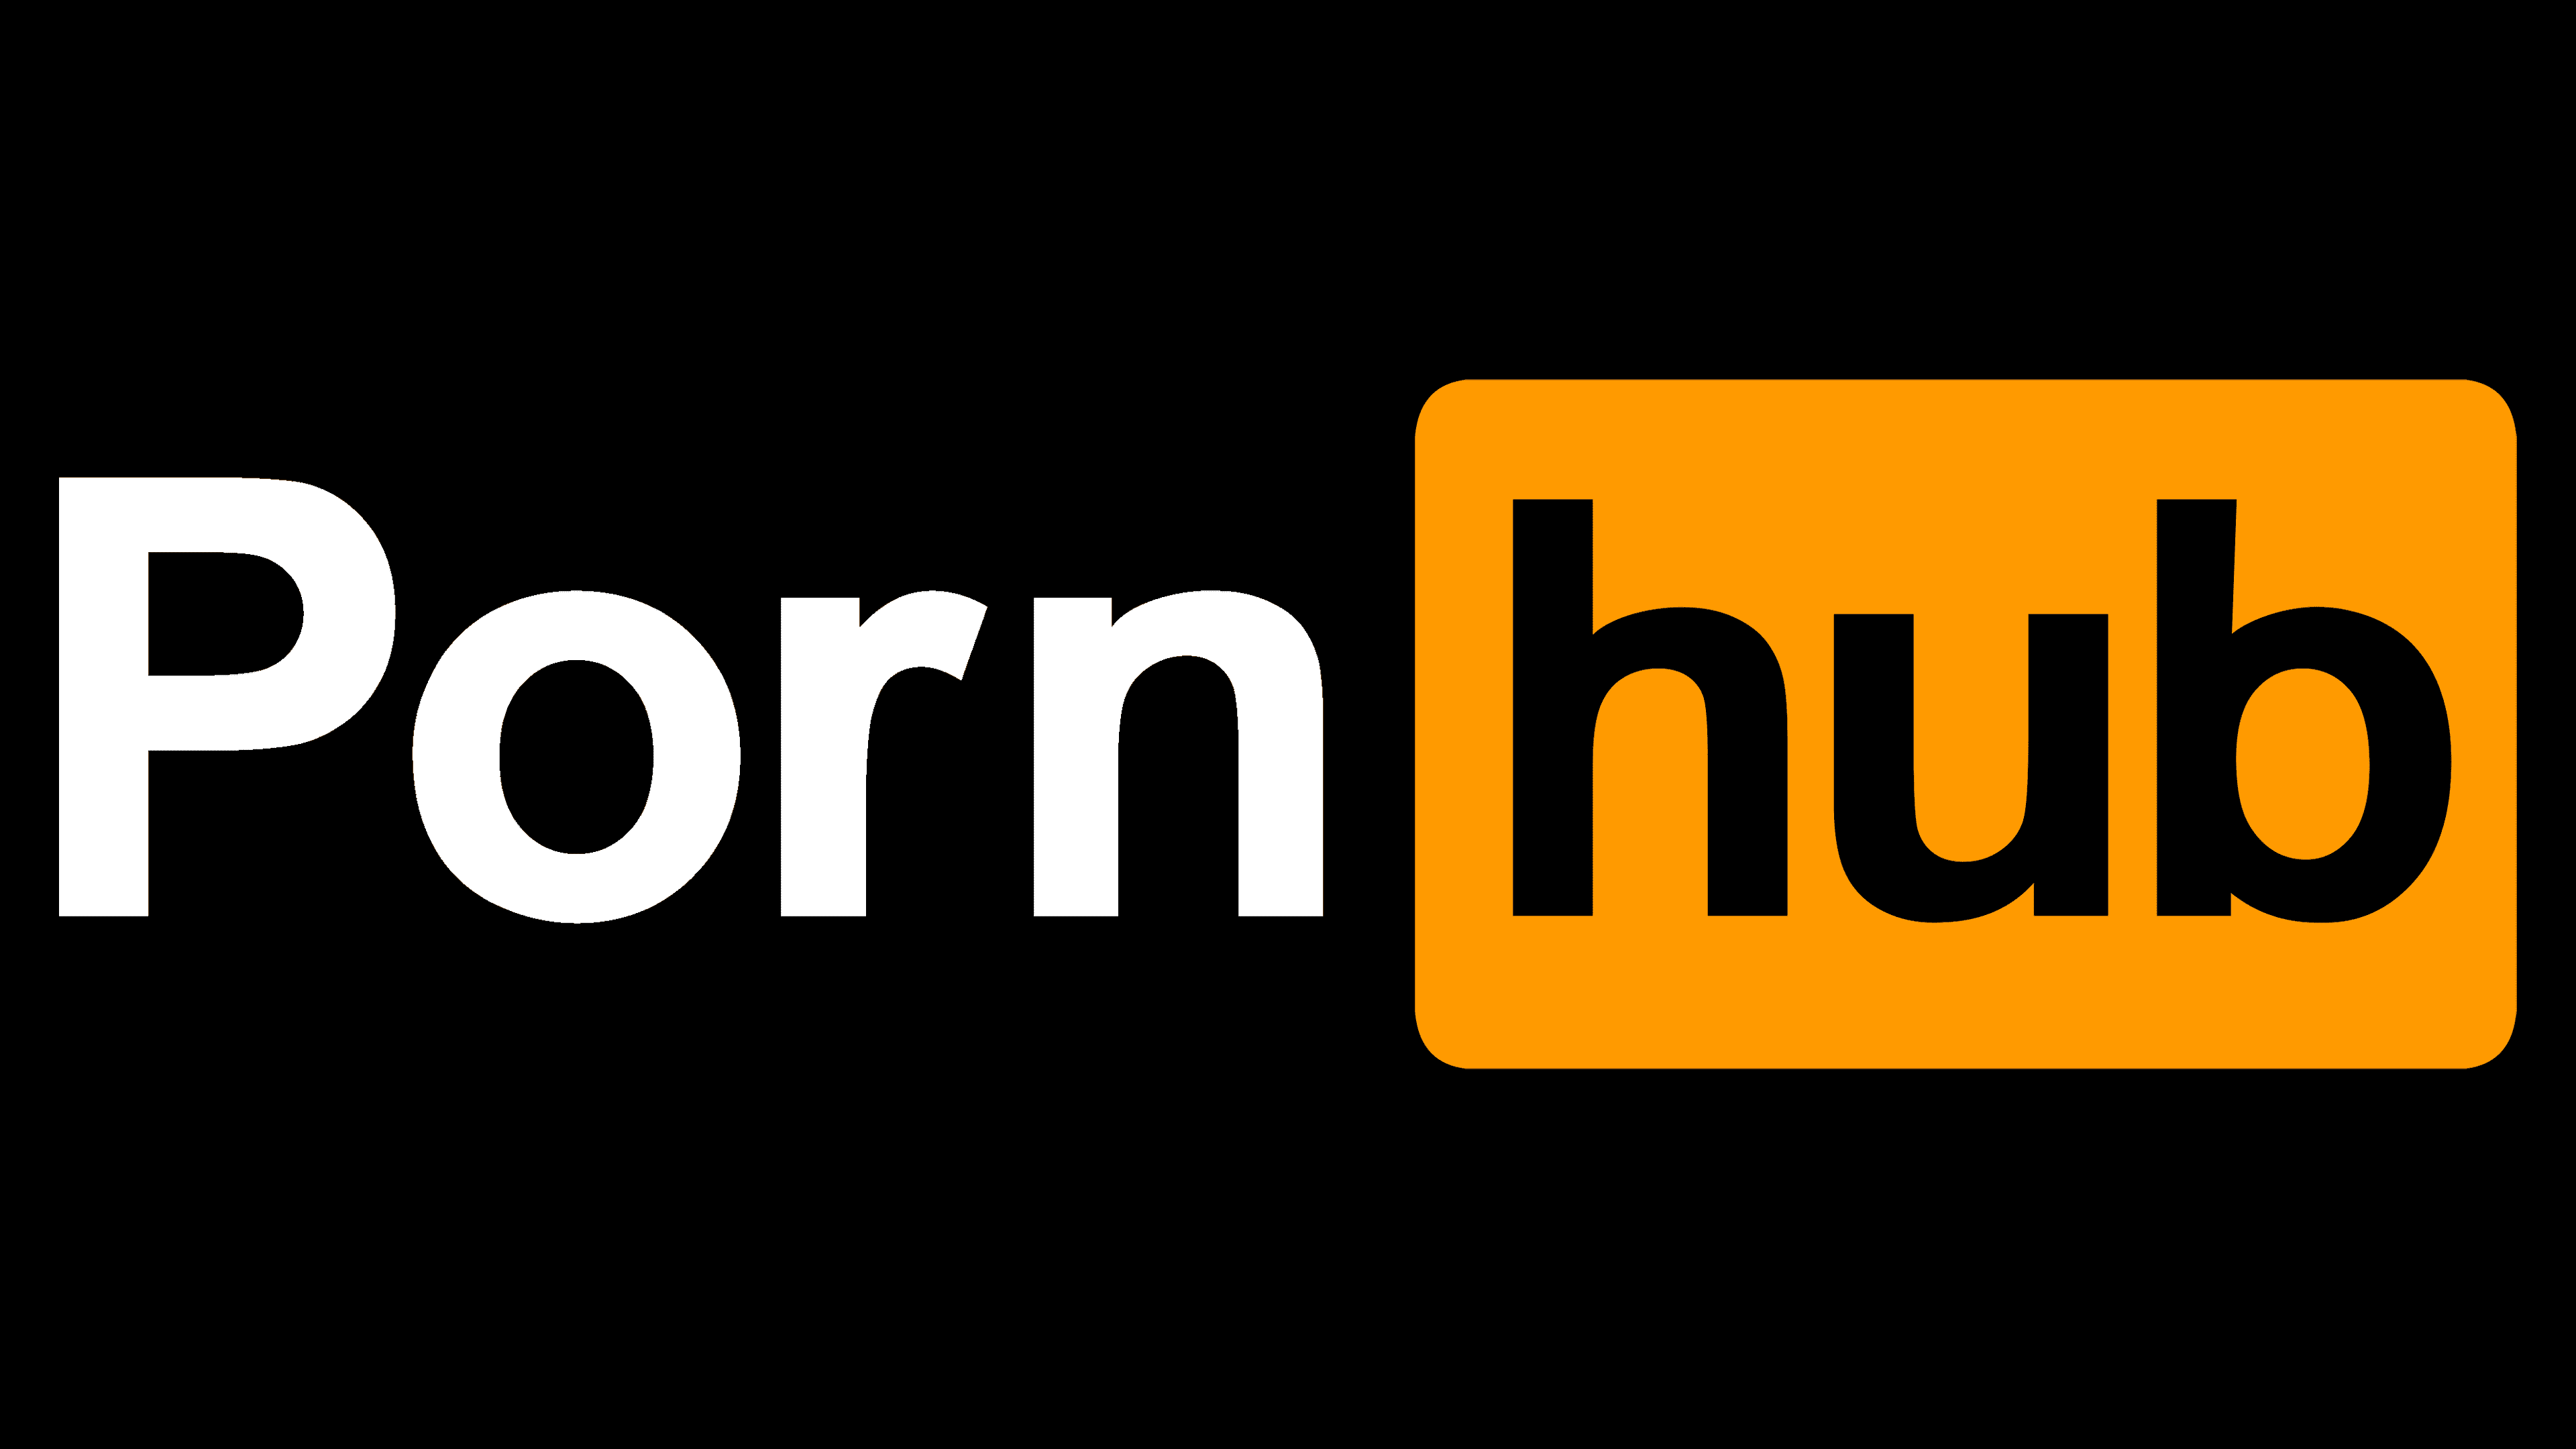 Pornhub. net